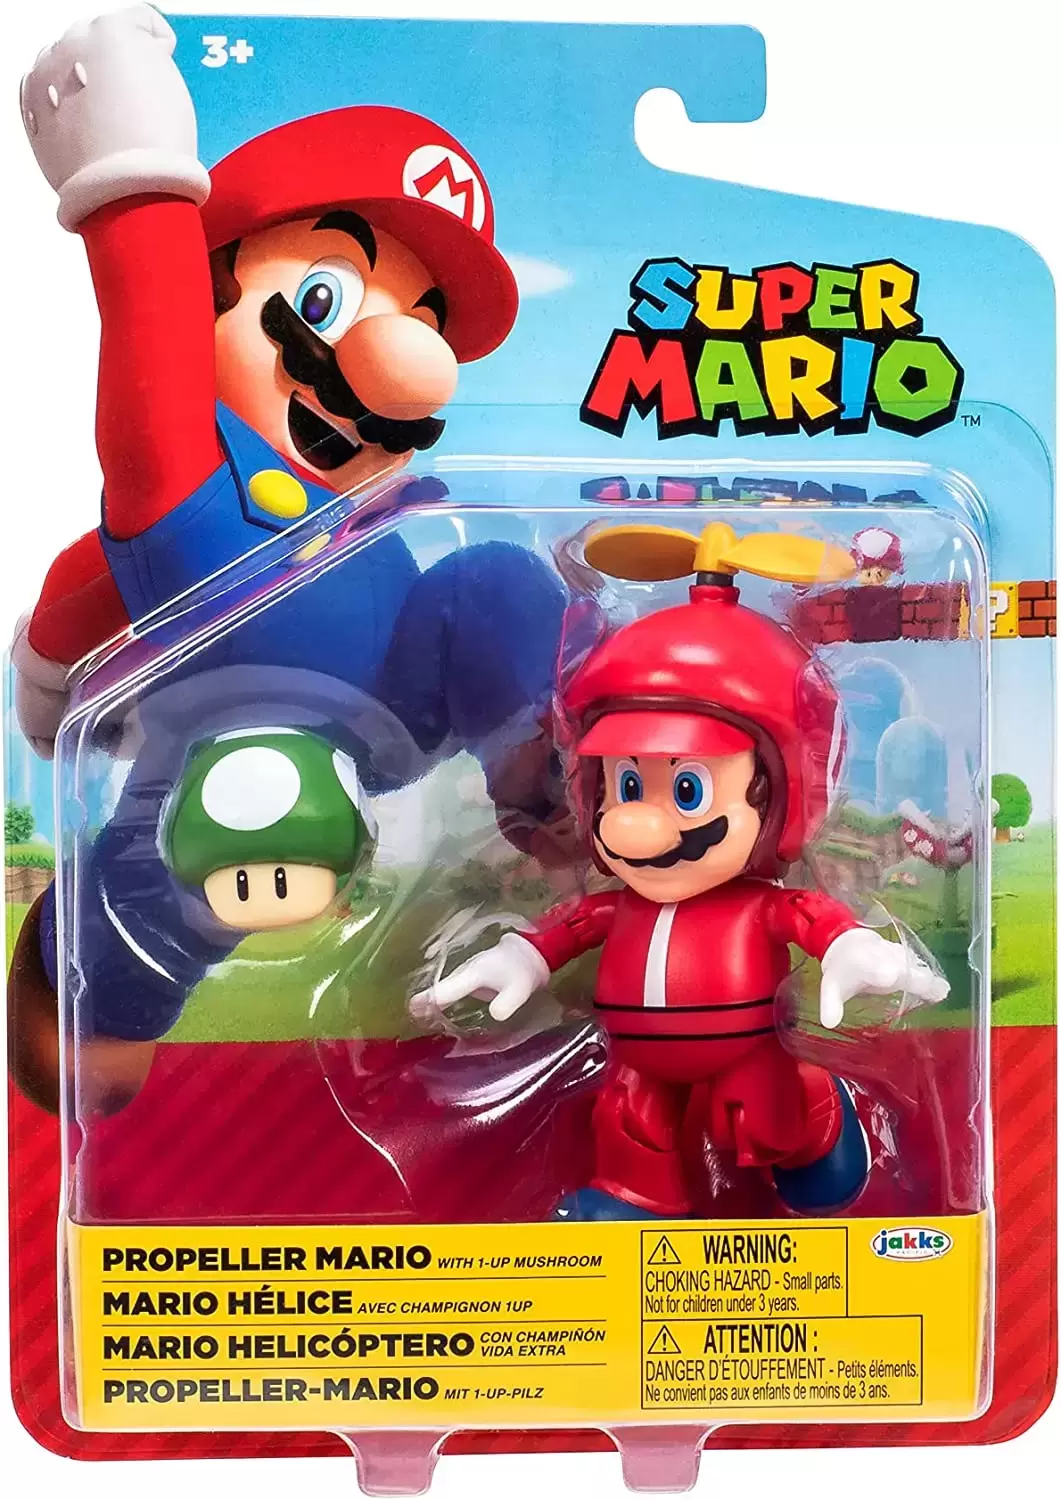 World of Nintendo - Propeller Mario with 1-up Mushroom